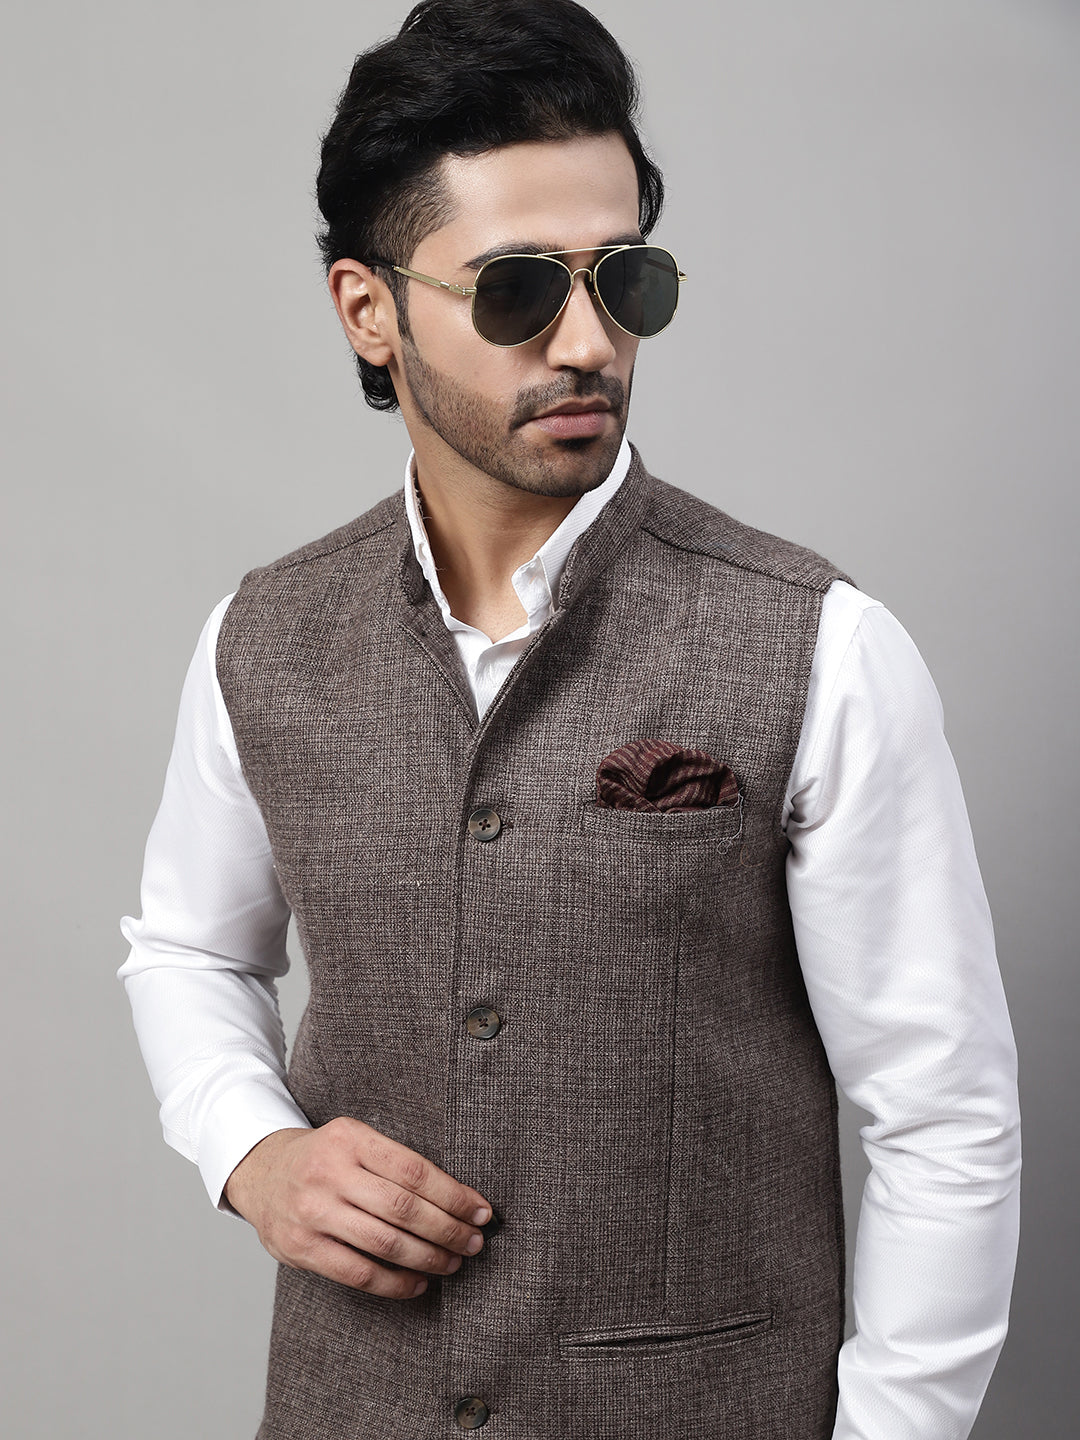 nehru jacket men Textured nehru jacket wedding jacket party ethnic jacket  men | eBay